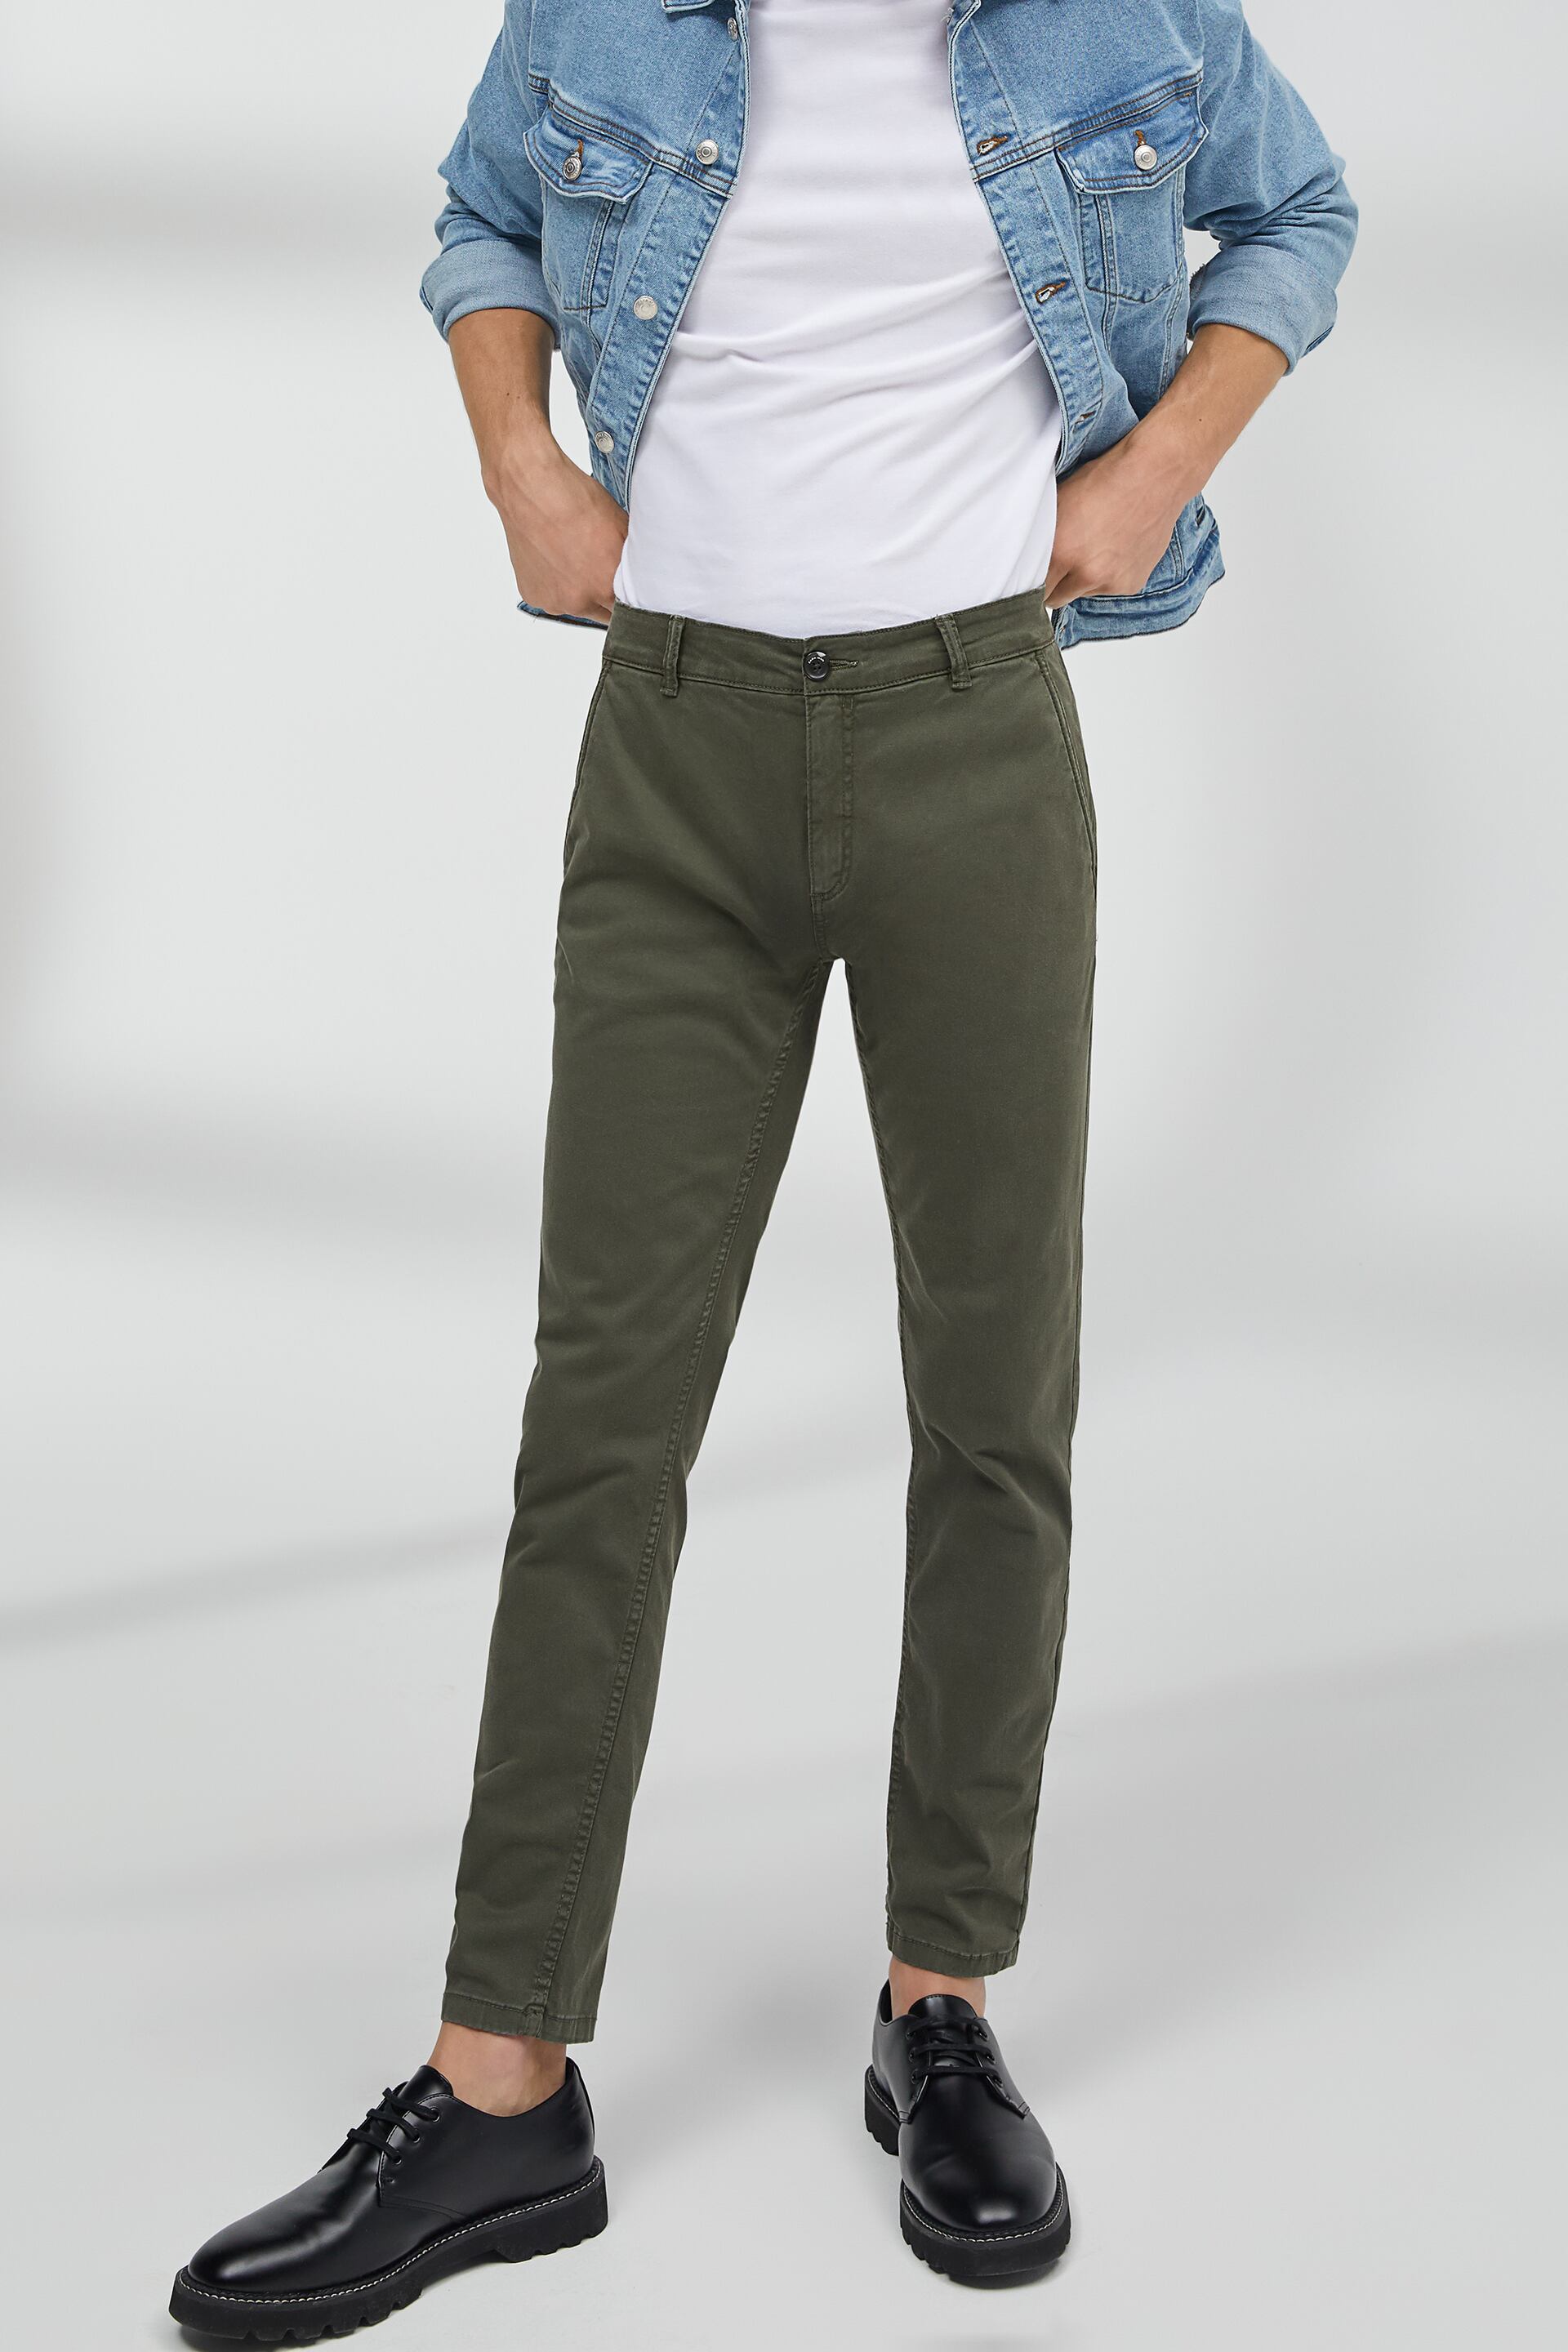 Khaki /& Camel Available in Navy RRP £22.99 Zara Men/'s Skinny Chino Trousers